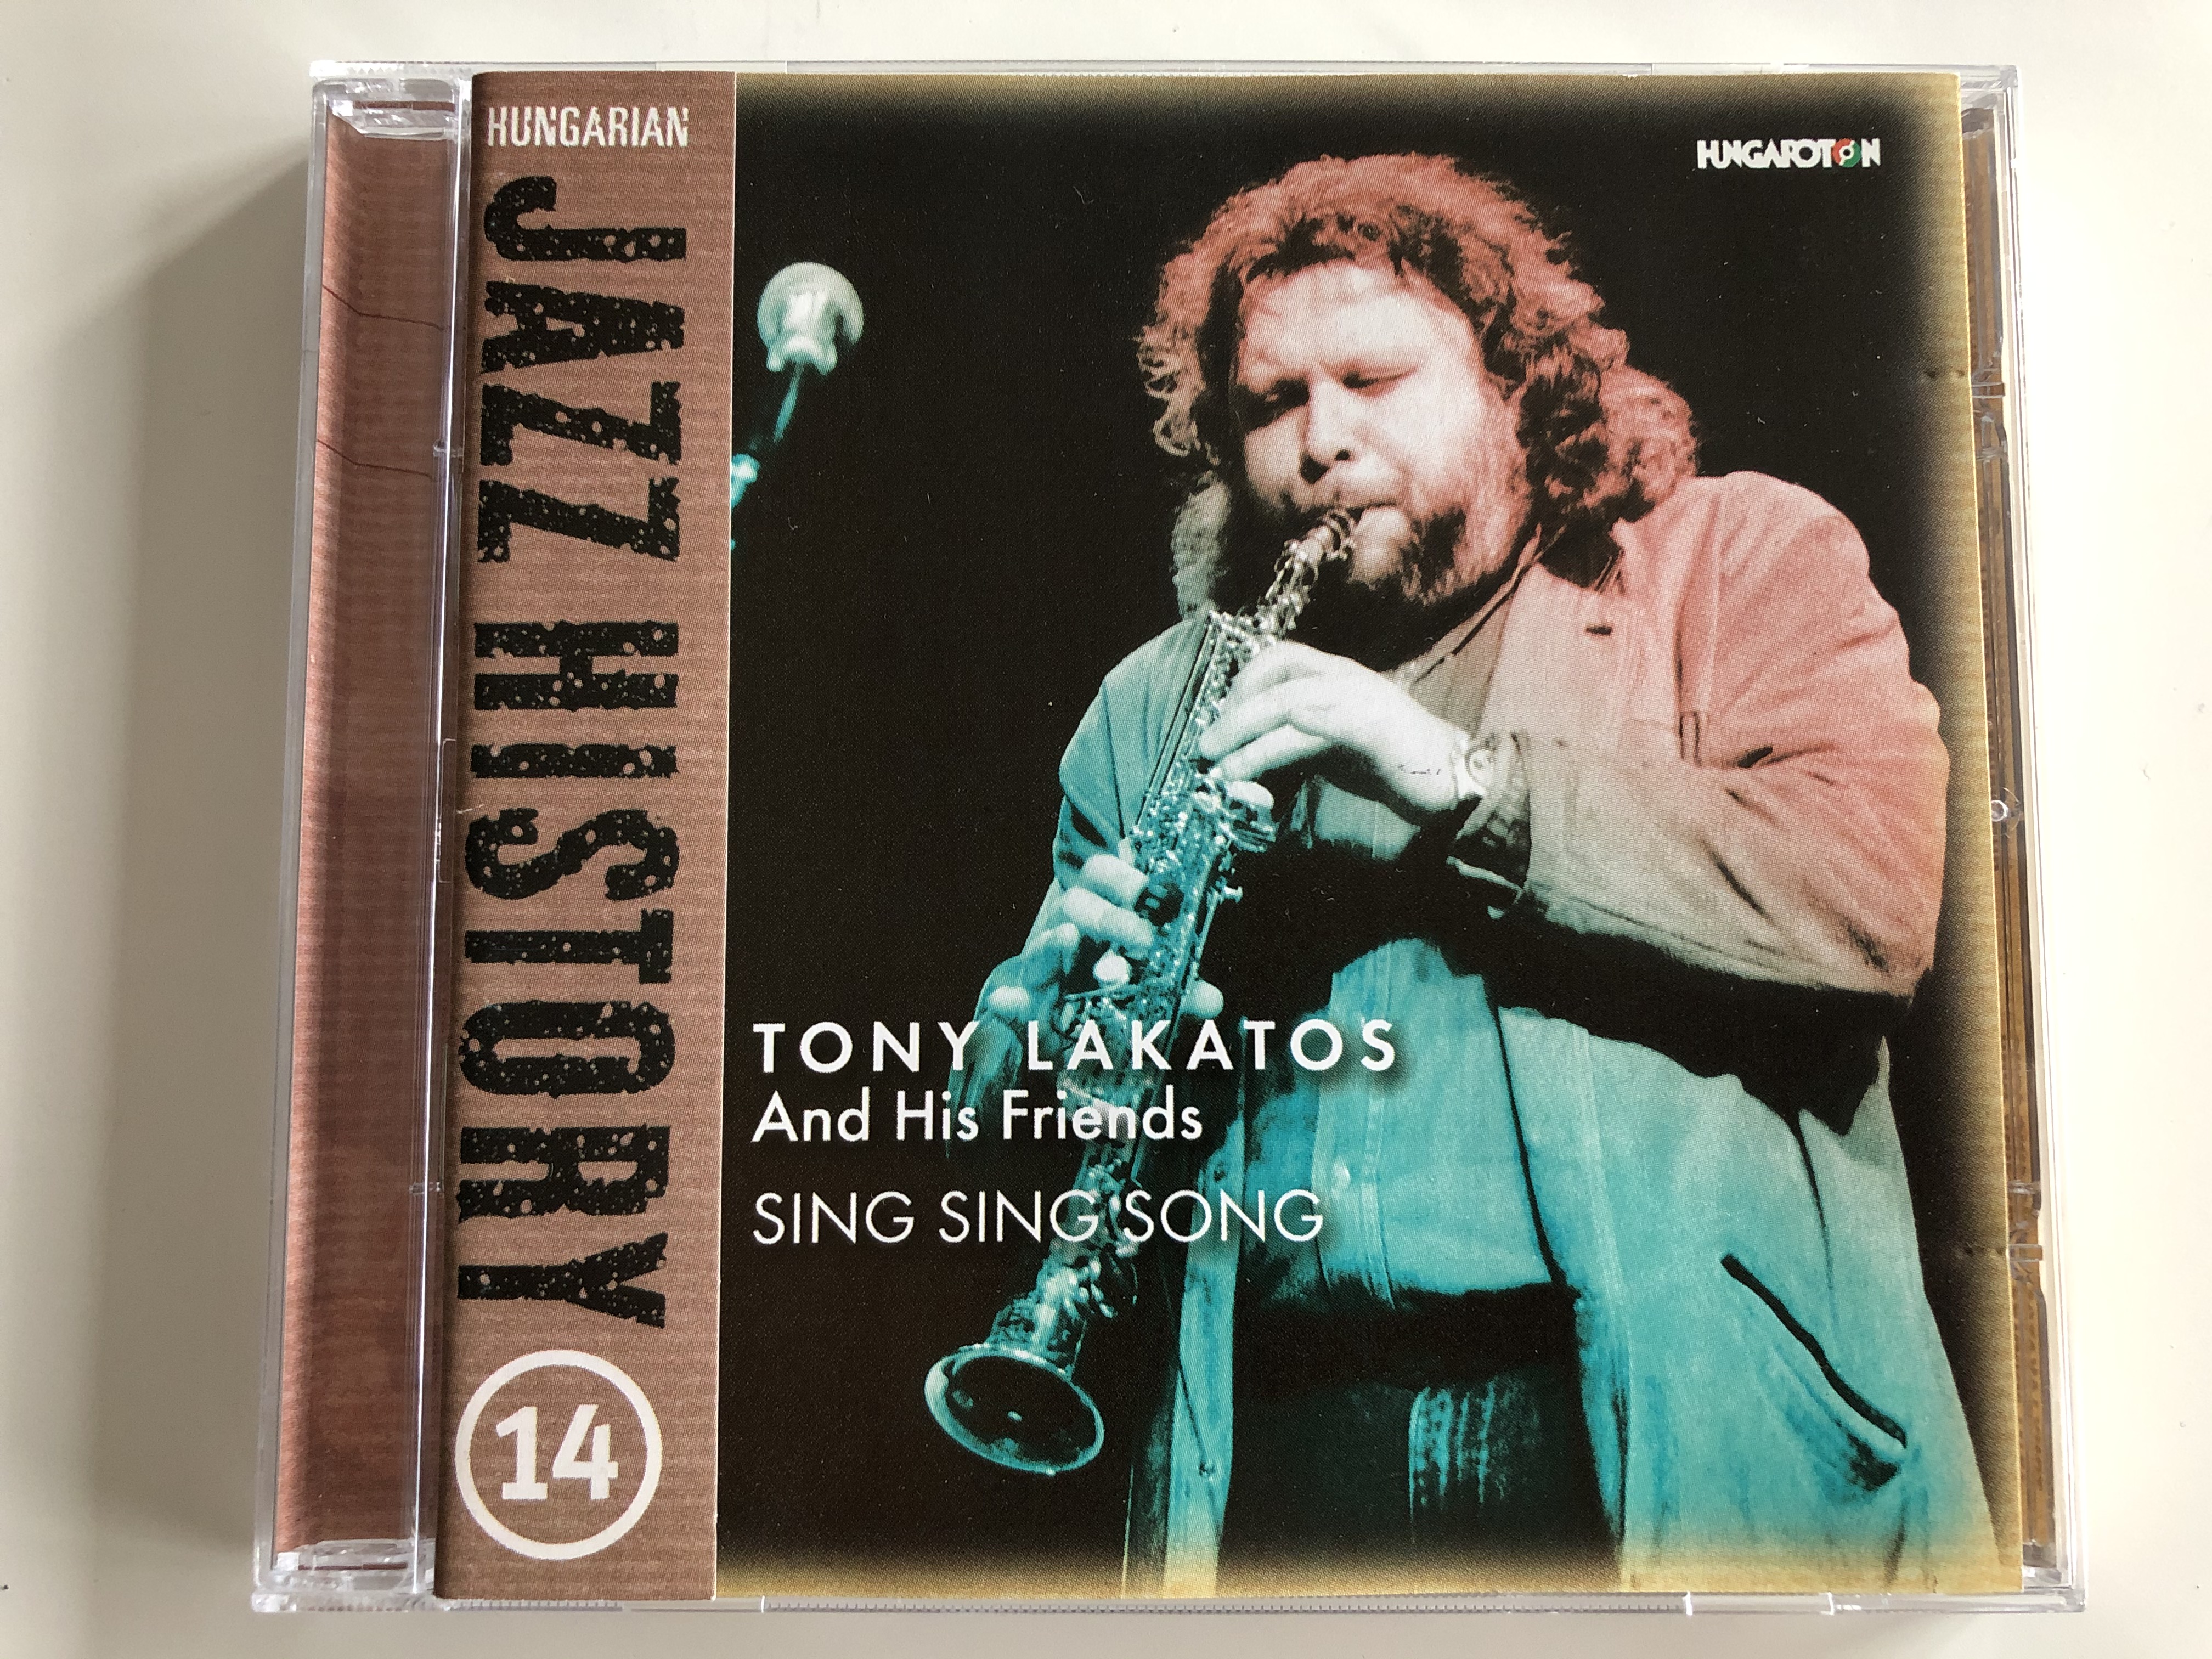 tony-lakatos-and-his-friends-sing-sing-song-hungarian-jazz-history-14-hungaroton-audio-cd-2005-hcd-71192-1-.jpg